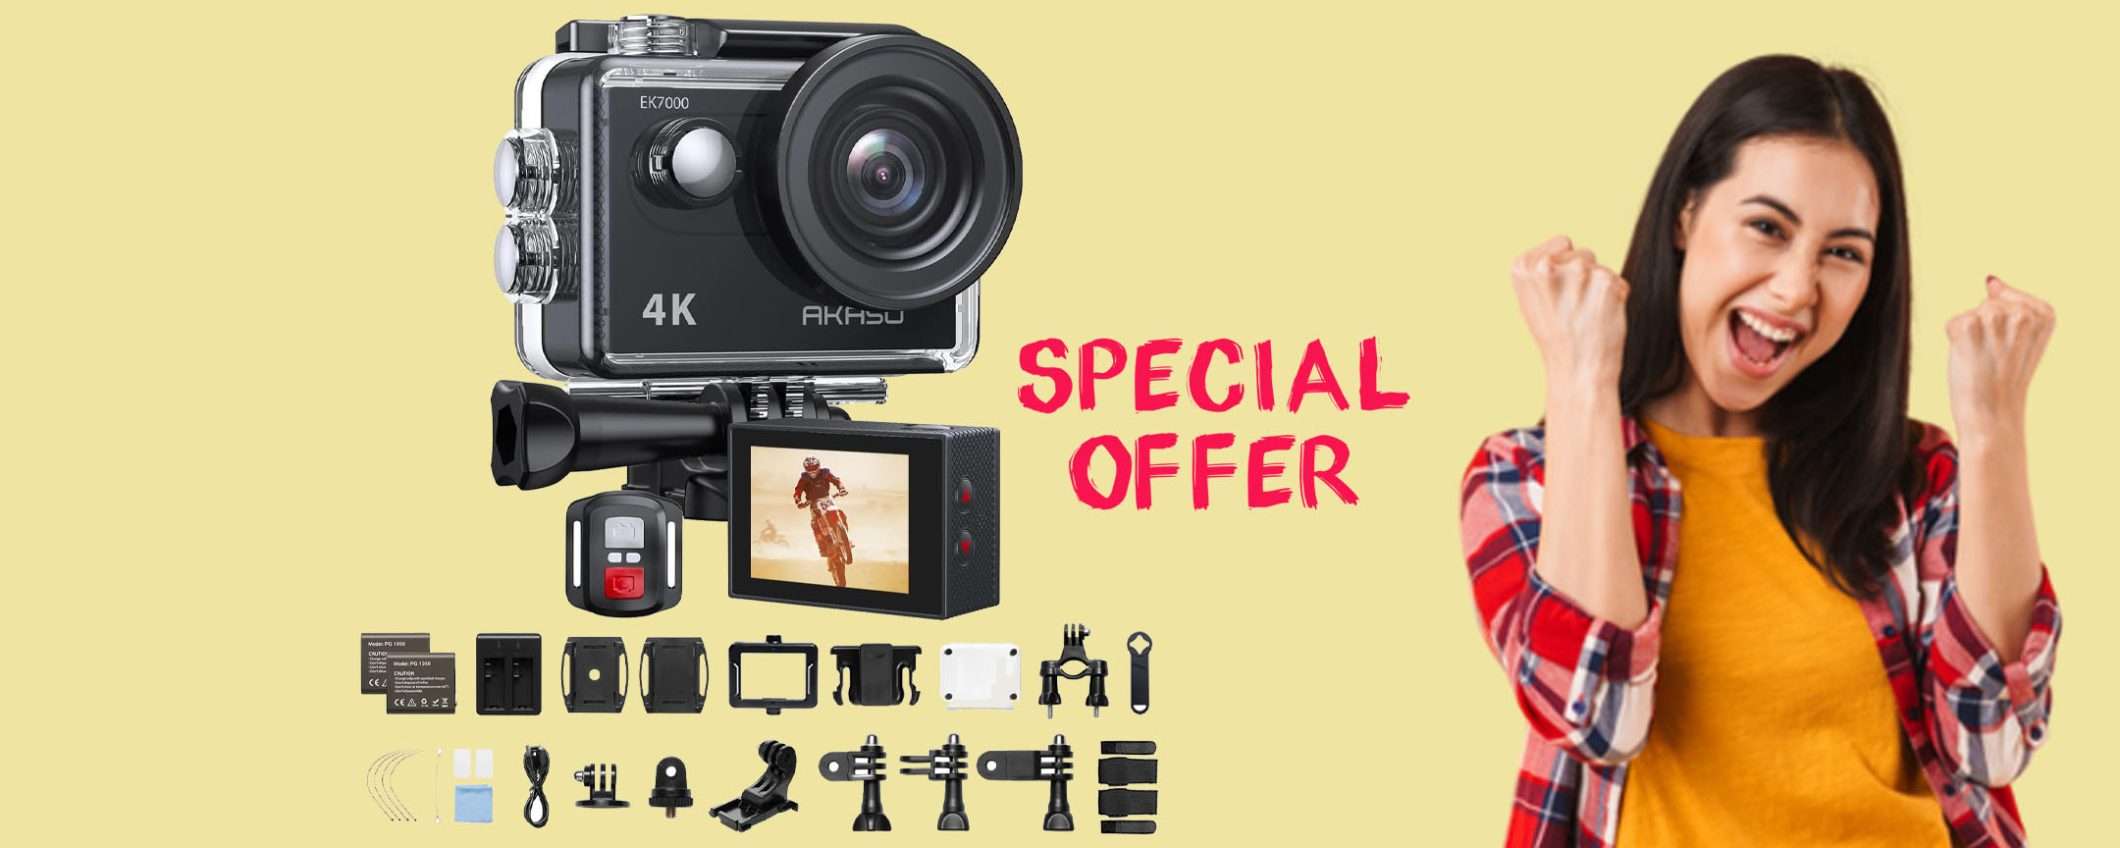 Action Cam 4K con accessori: sconto coupon IMPERDIBILE, tua a 59€